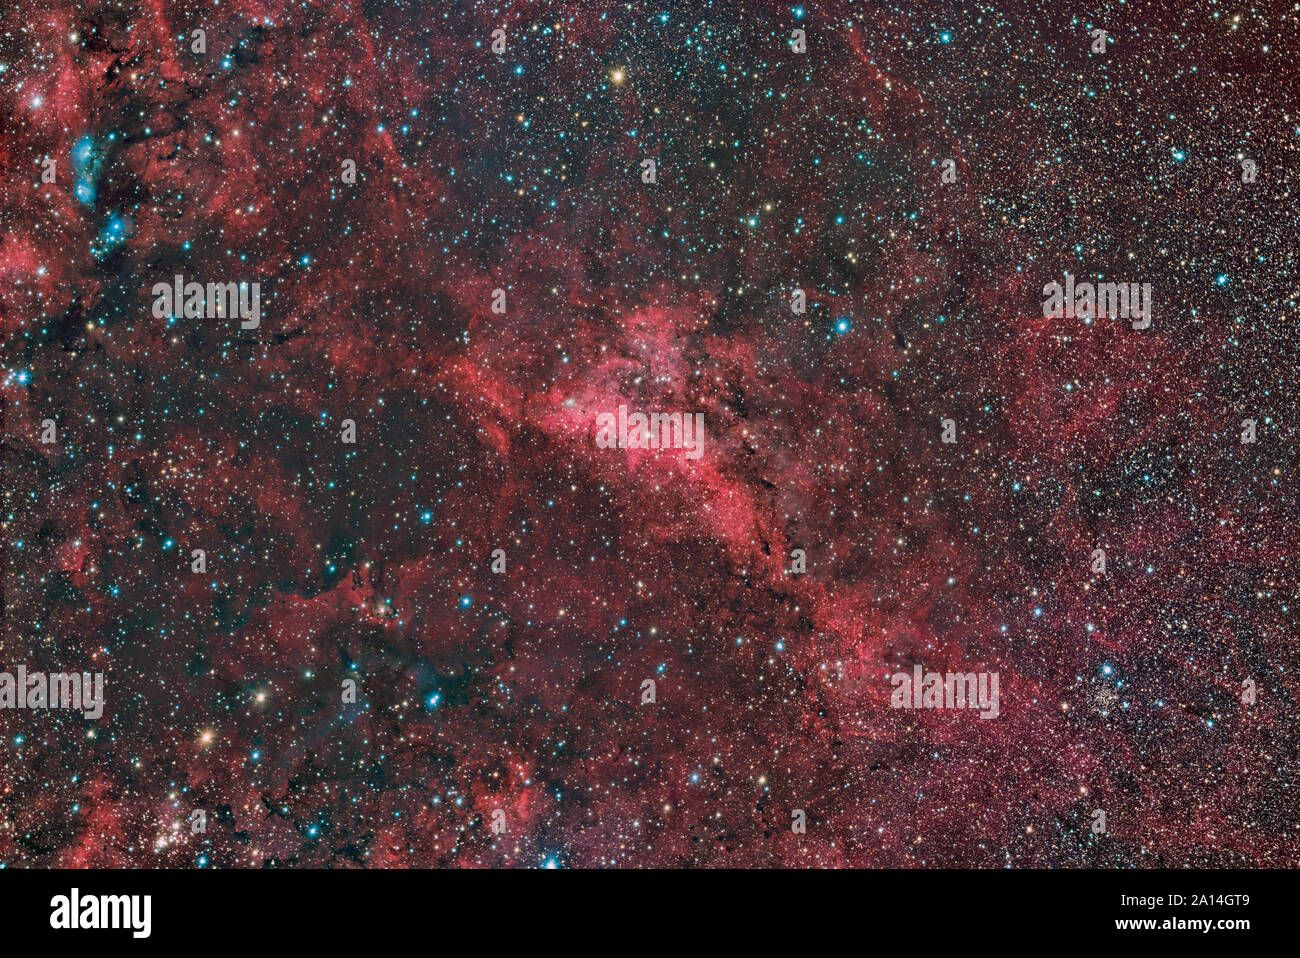 LBN 251 emission and reflection nebula in the constellation Cygnus. Stock Photo